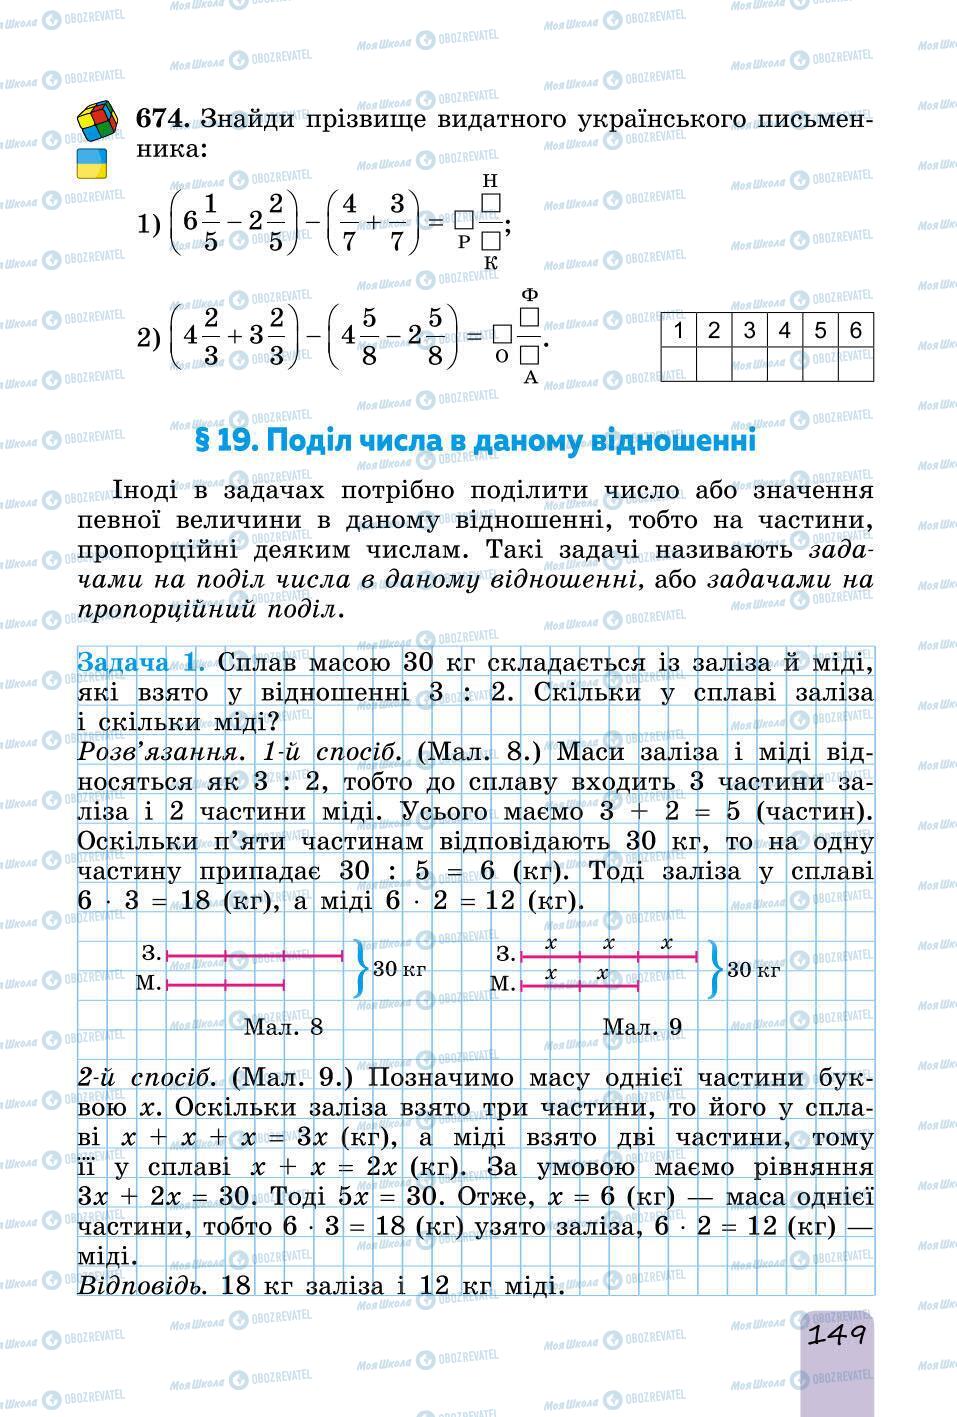 Учебники Математика 6 класс страница 149